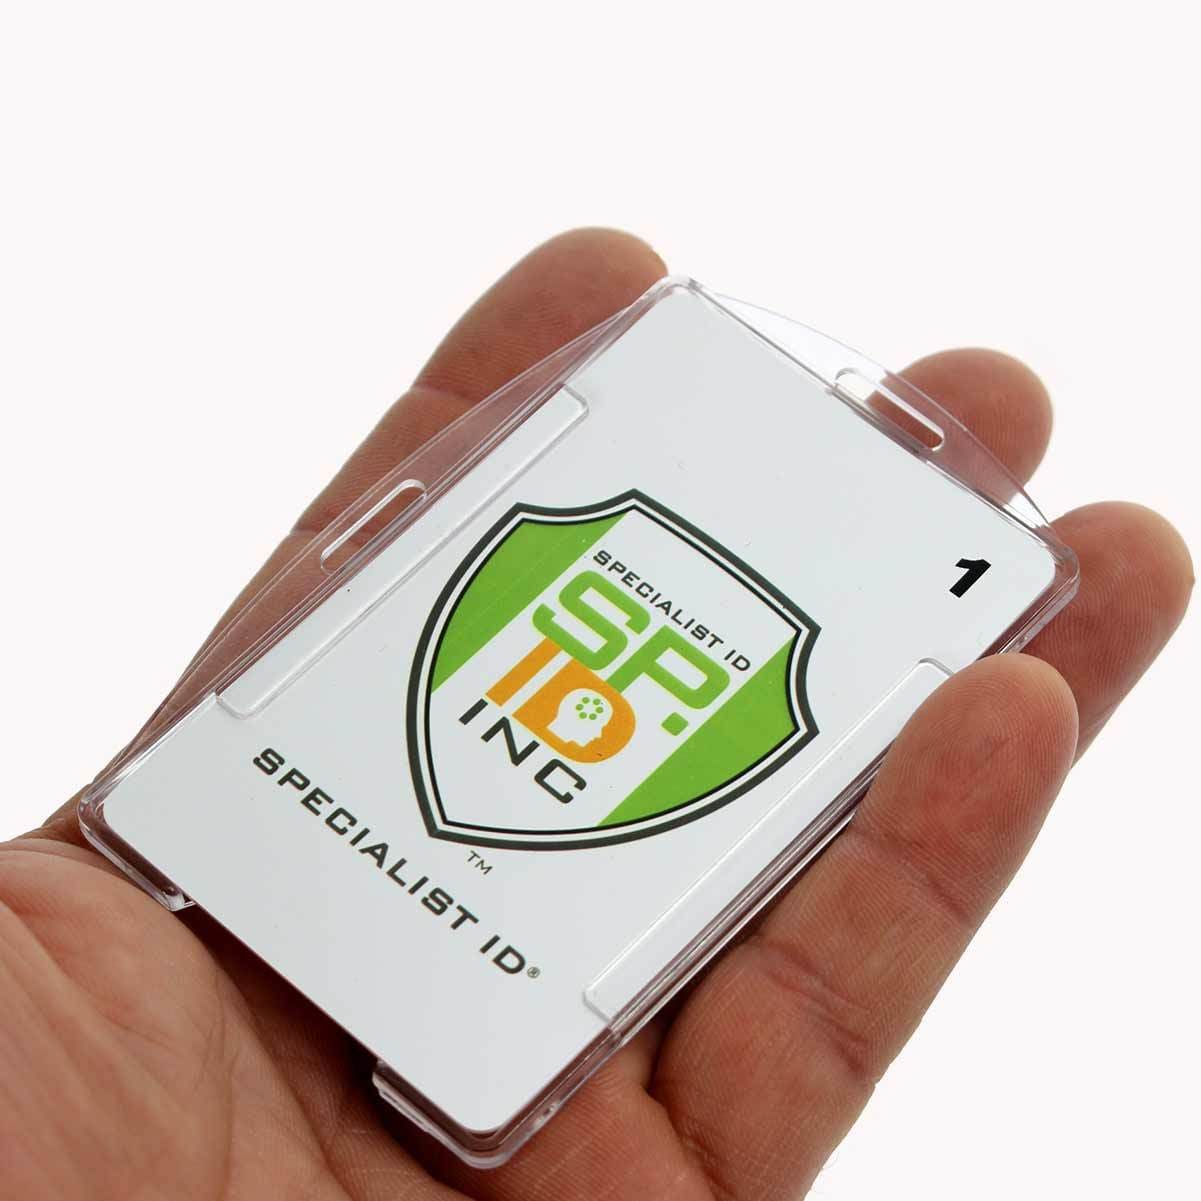 Crystal Clear Rigid Open-Faced Single ID Card Holder (P/N SPID-075) SPID-075-CLEAR